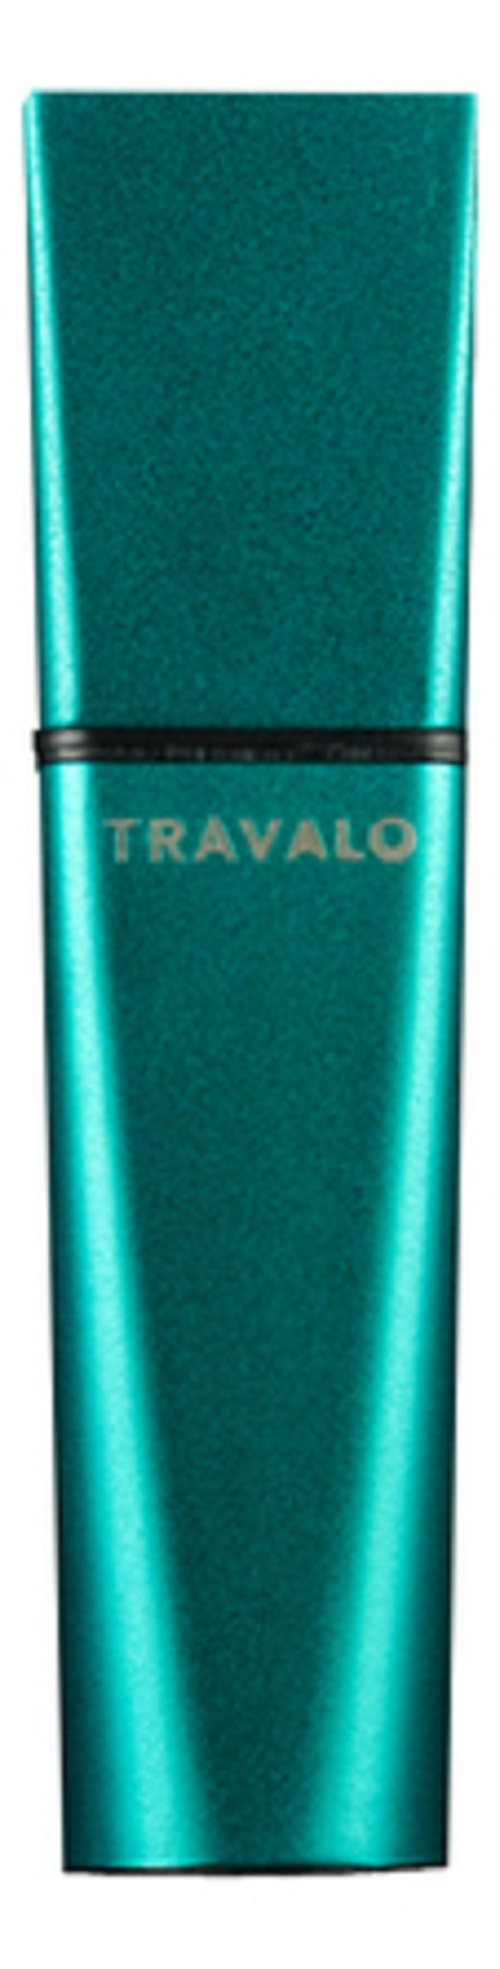 Атомайзер Travalo Obscura Perfume Spray 5мл Green gastro obscura кулинарные чудеса со всего мира